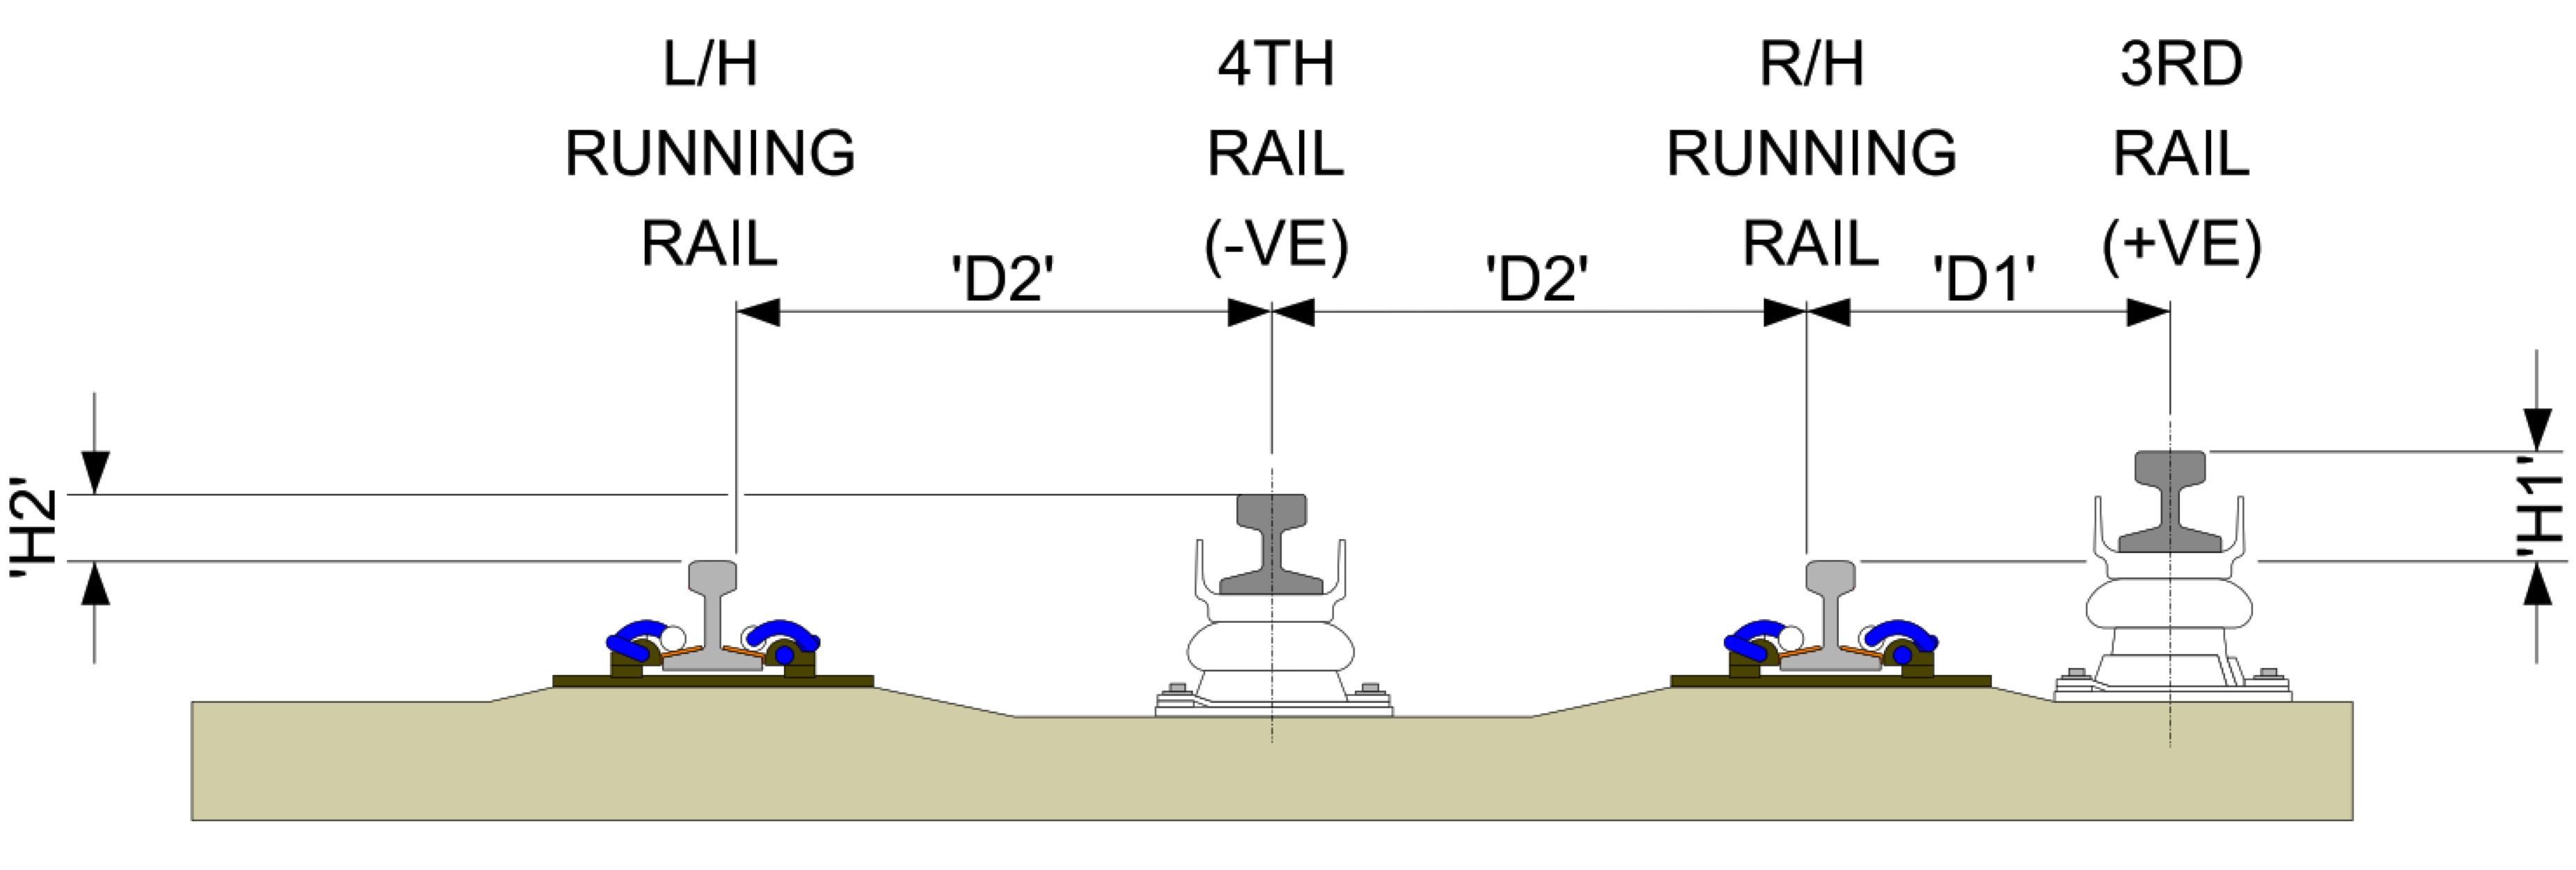 3rd & 4th Rail Cross section